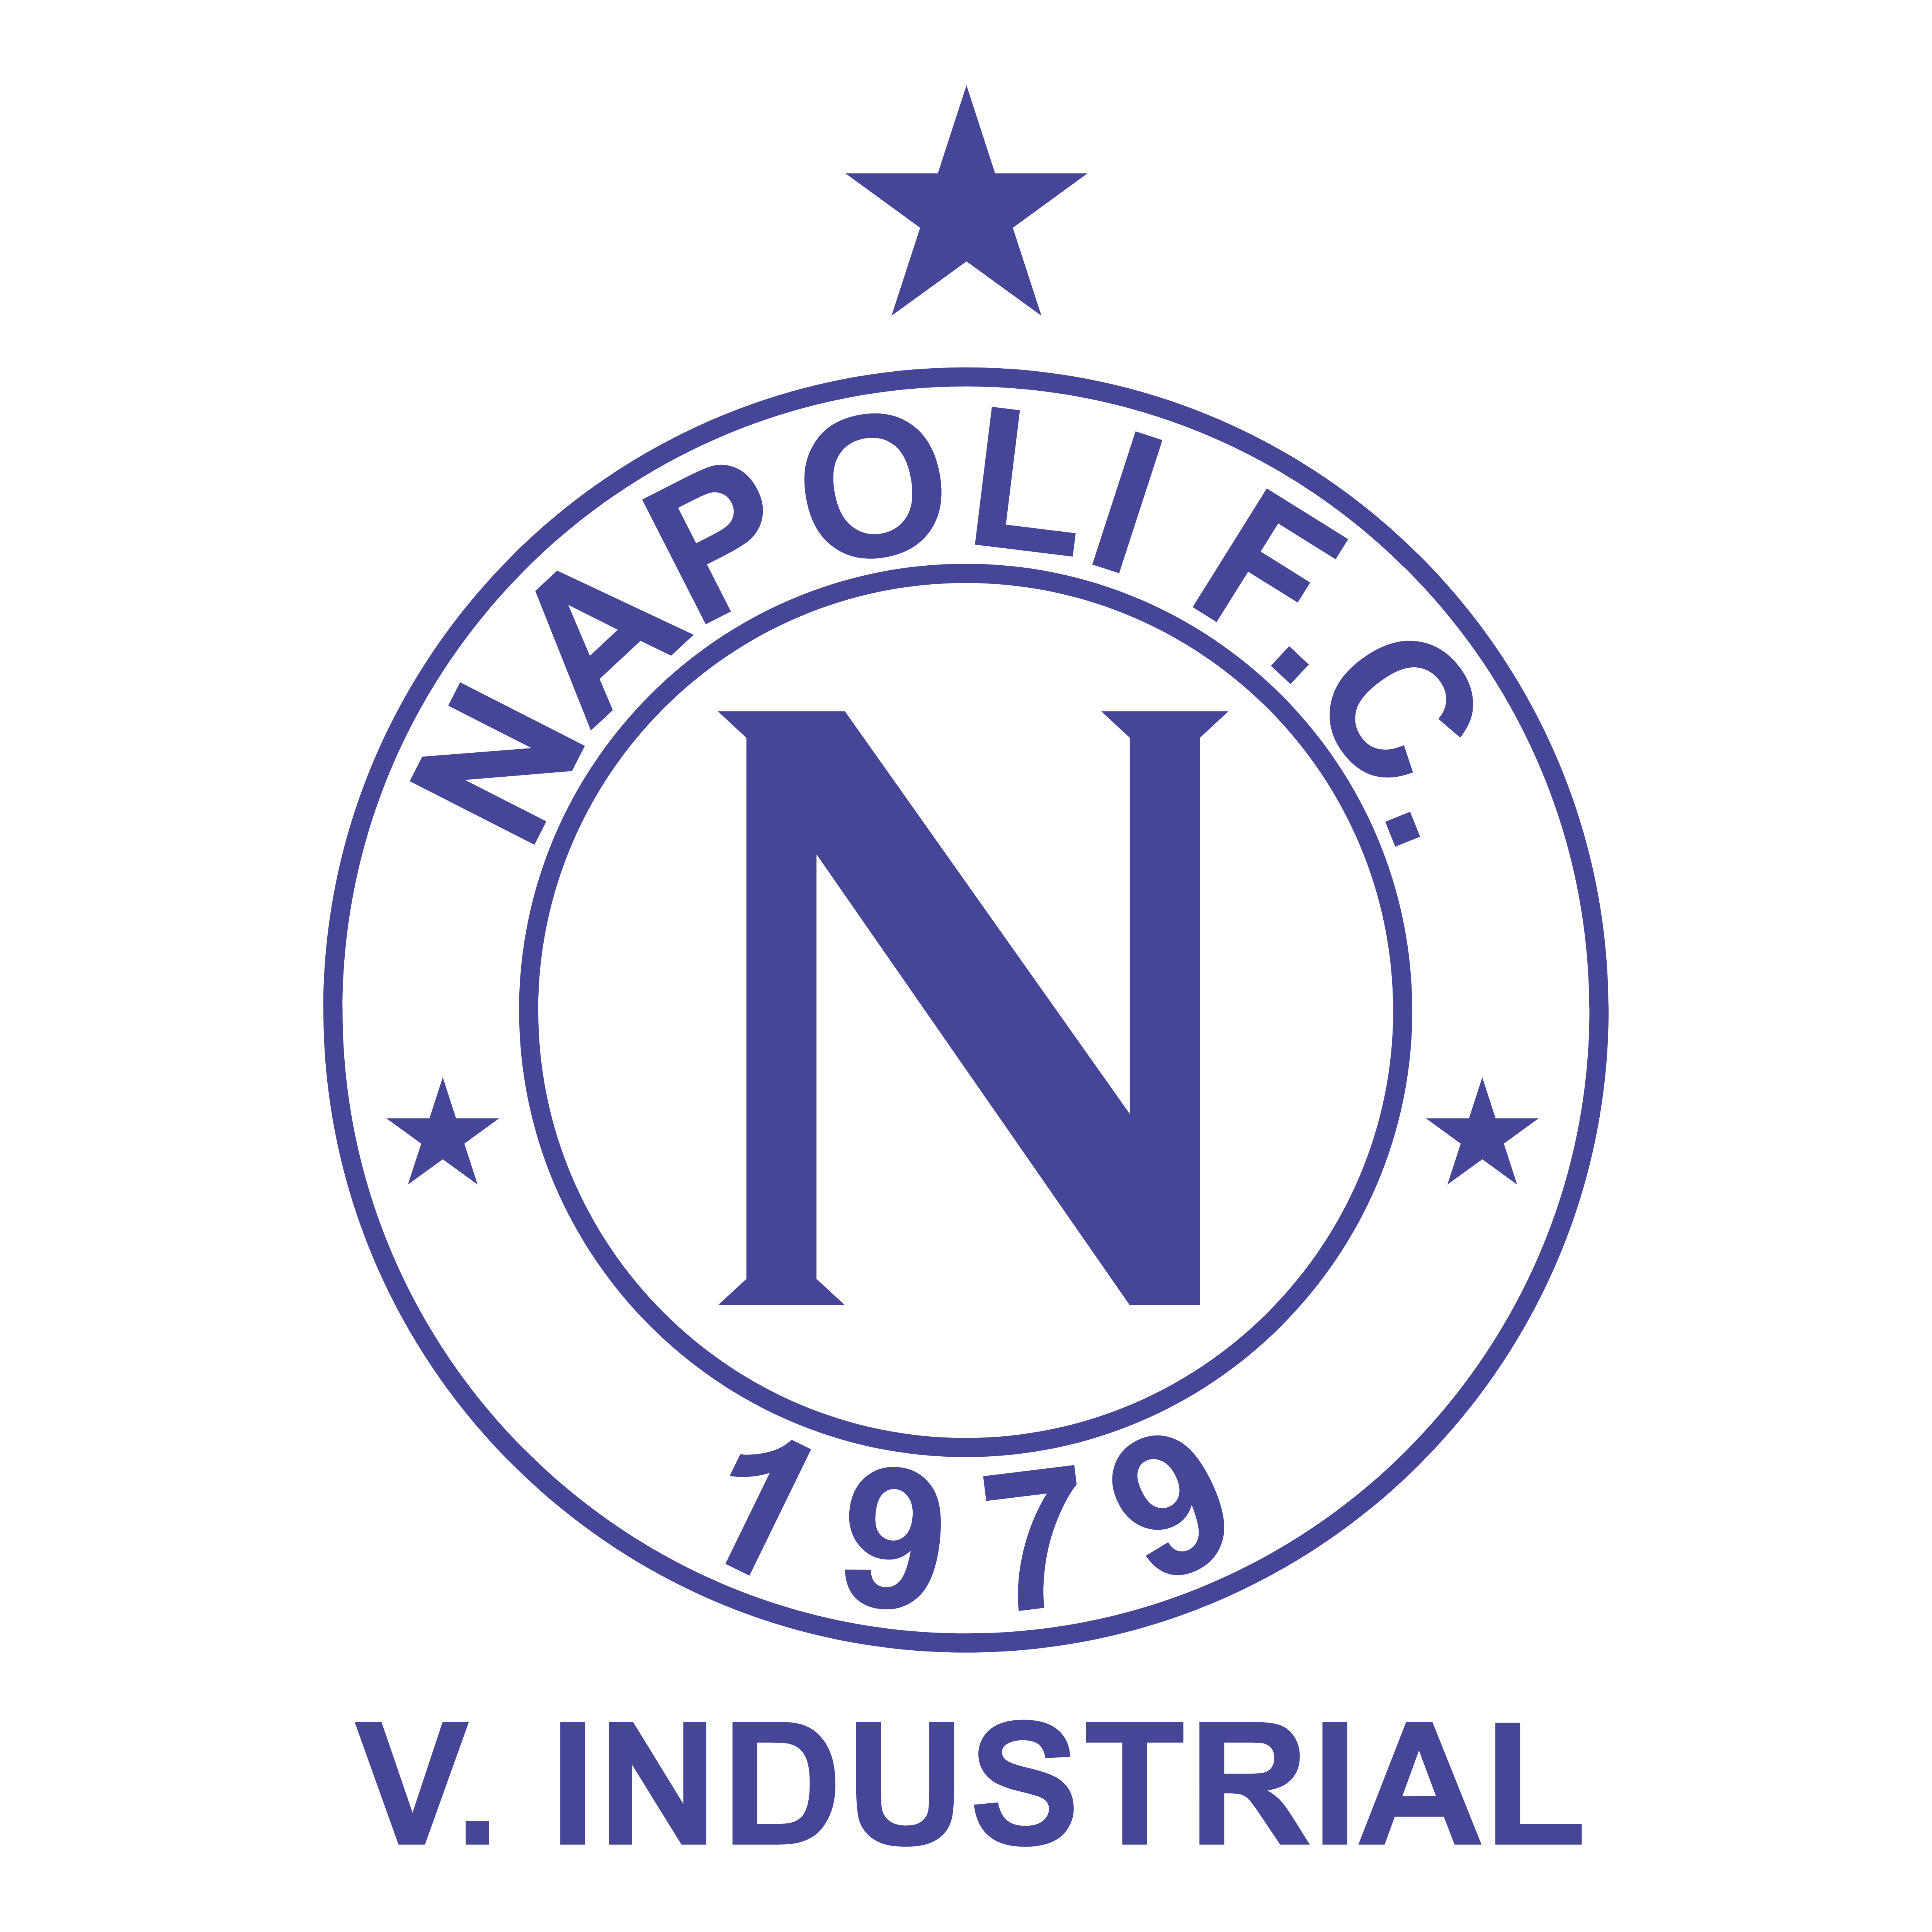  Napoli  Futebol Clube de Sao Paulo SP Logos  Download